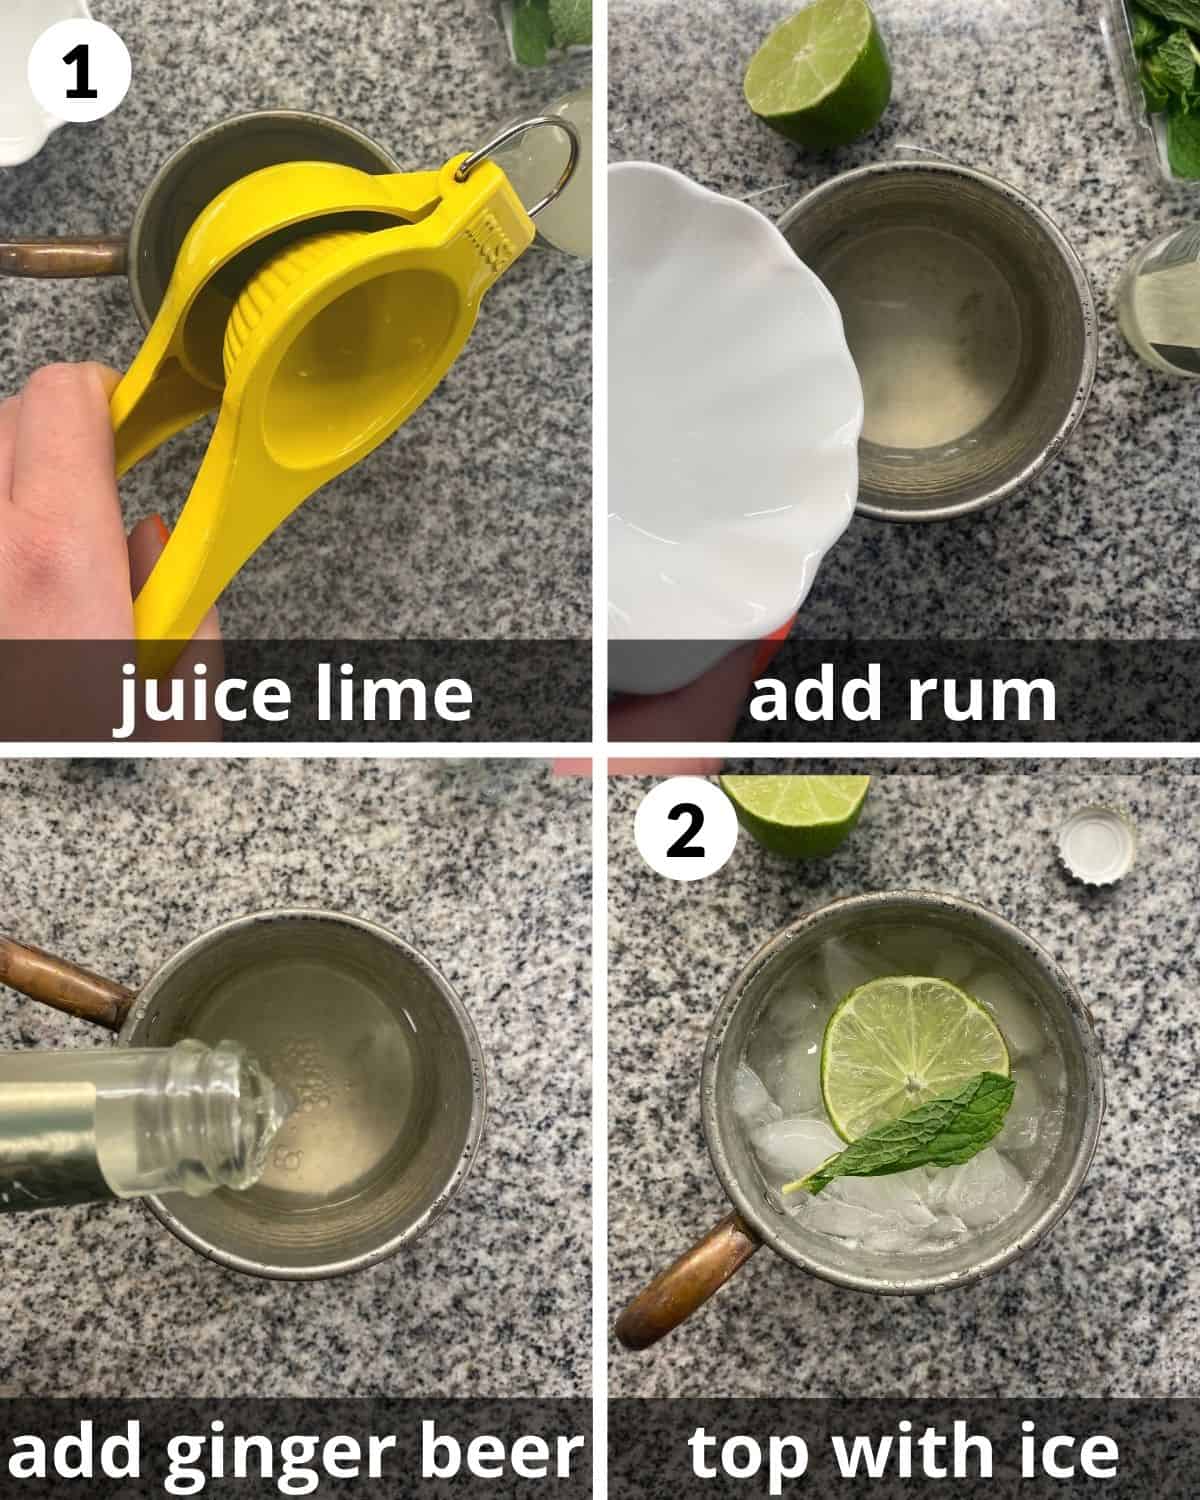 4 photos. Juicing the lime. Adding rum. Adding ginger beer. Garnishing.